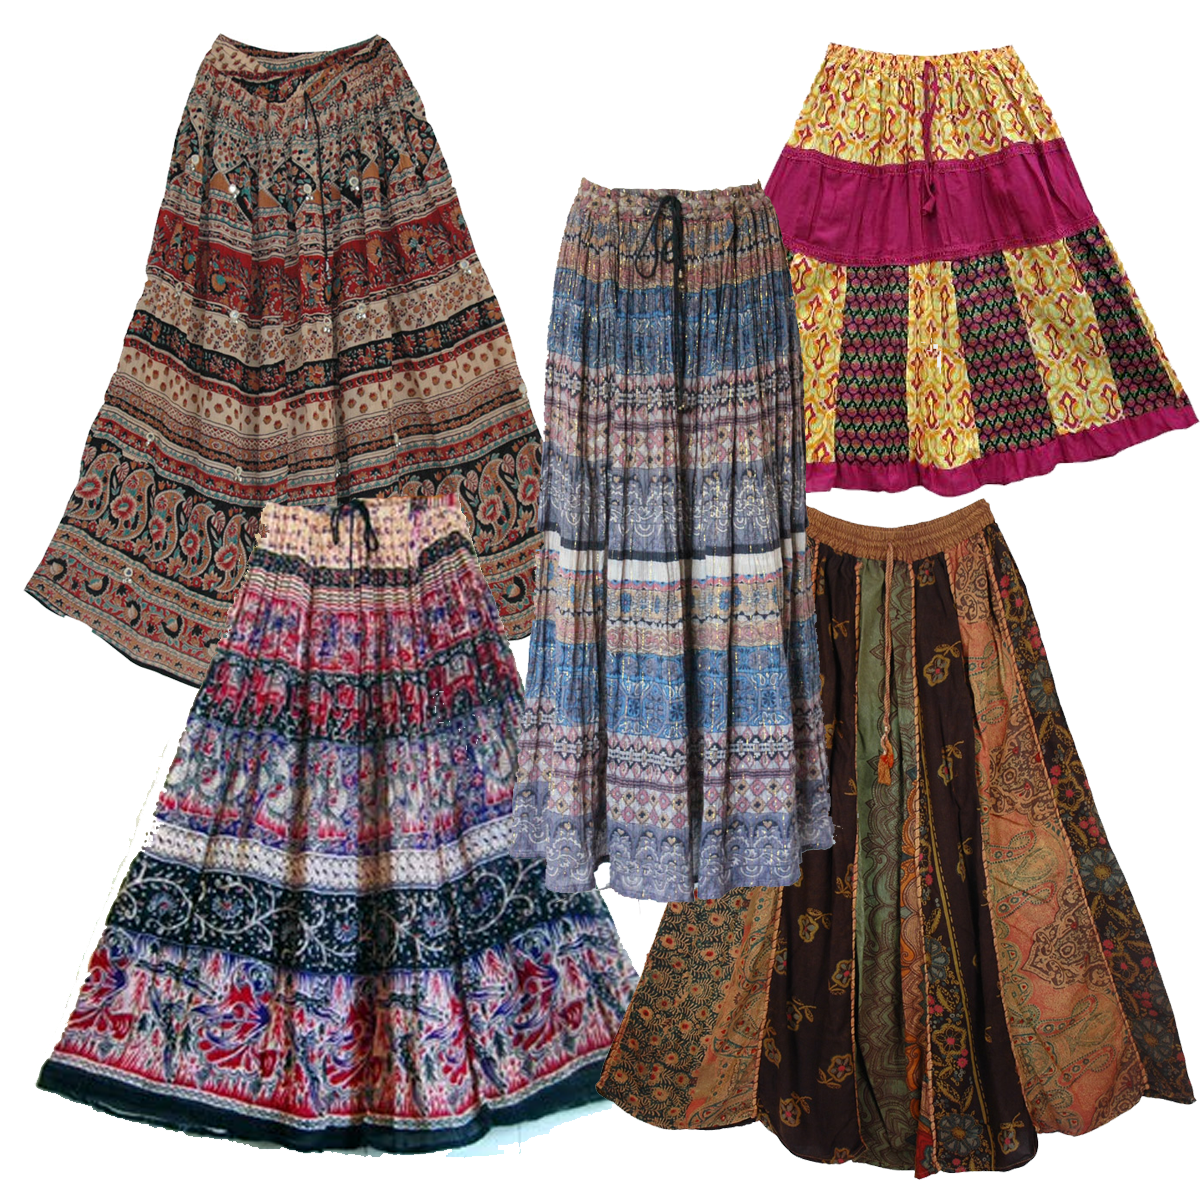 Ethnic Skirts Wholesale